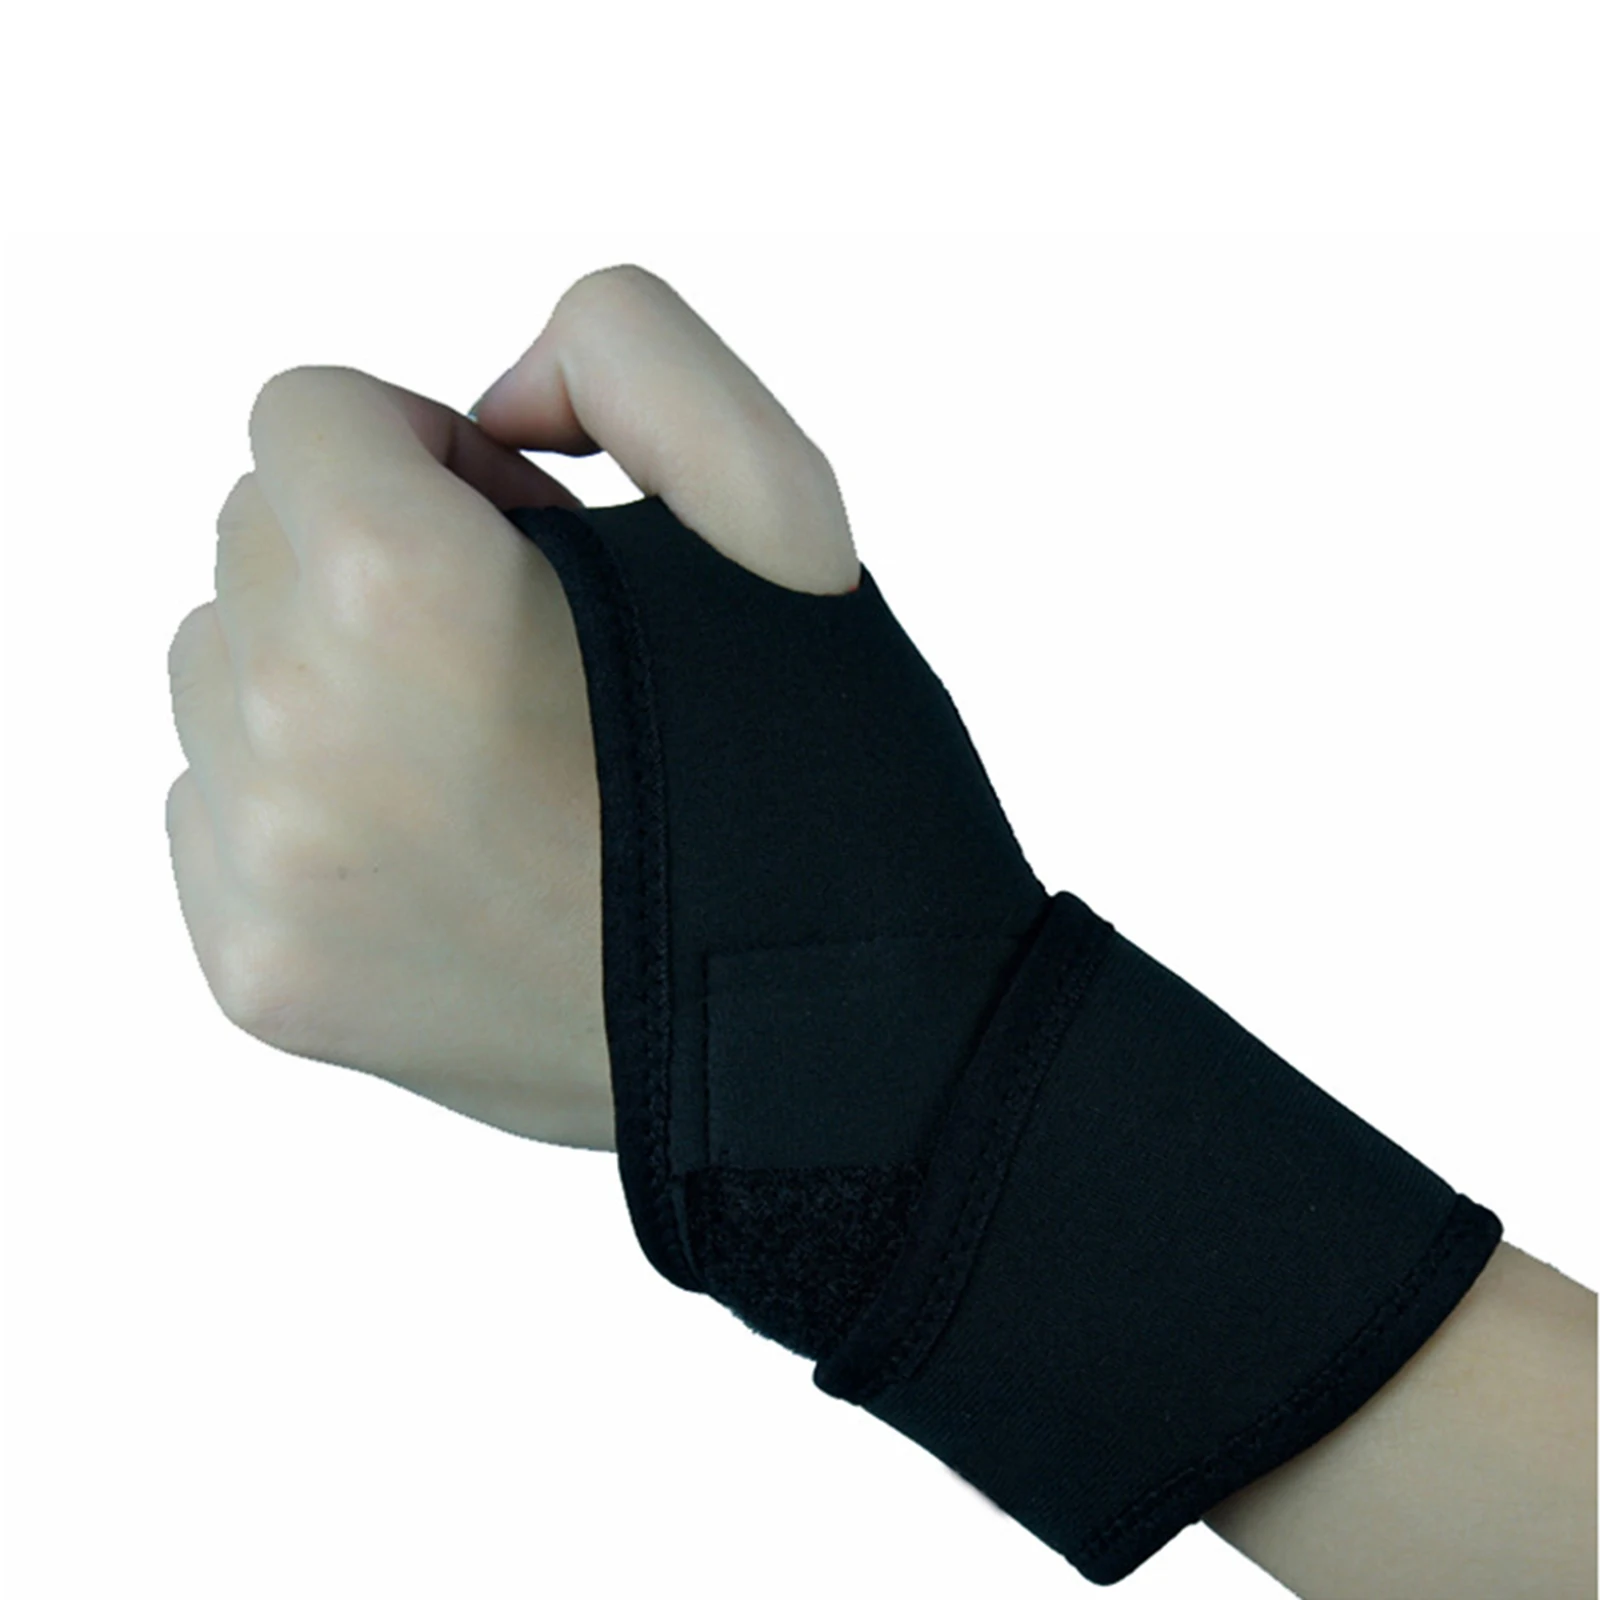 Universal Carpel Tunnel Wrist Brace Support Adjuster Wrap Sprain Strain Gym